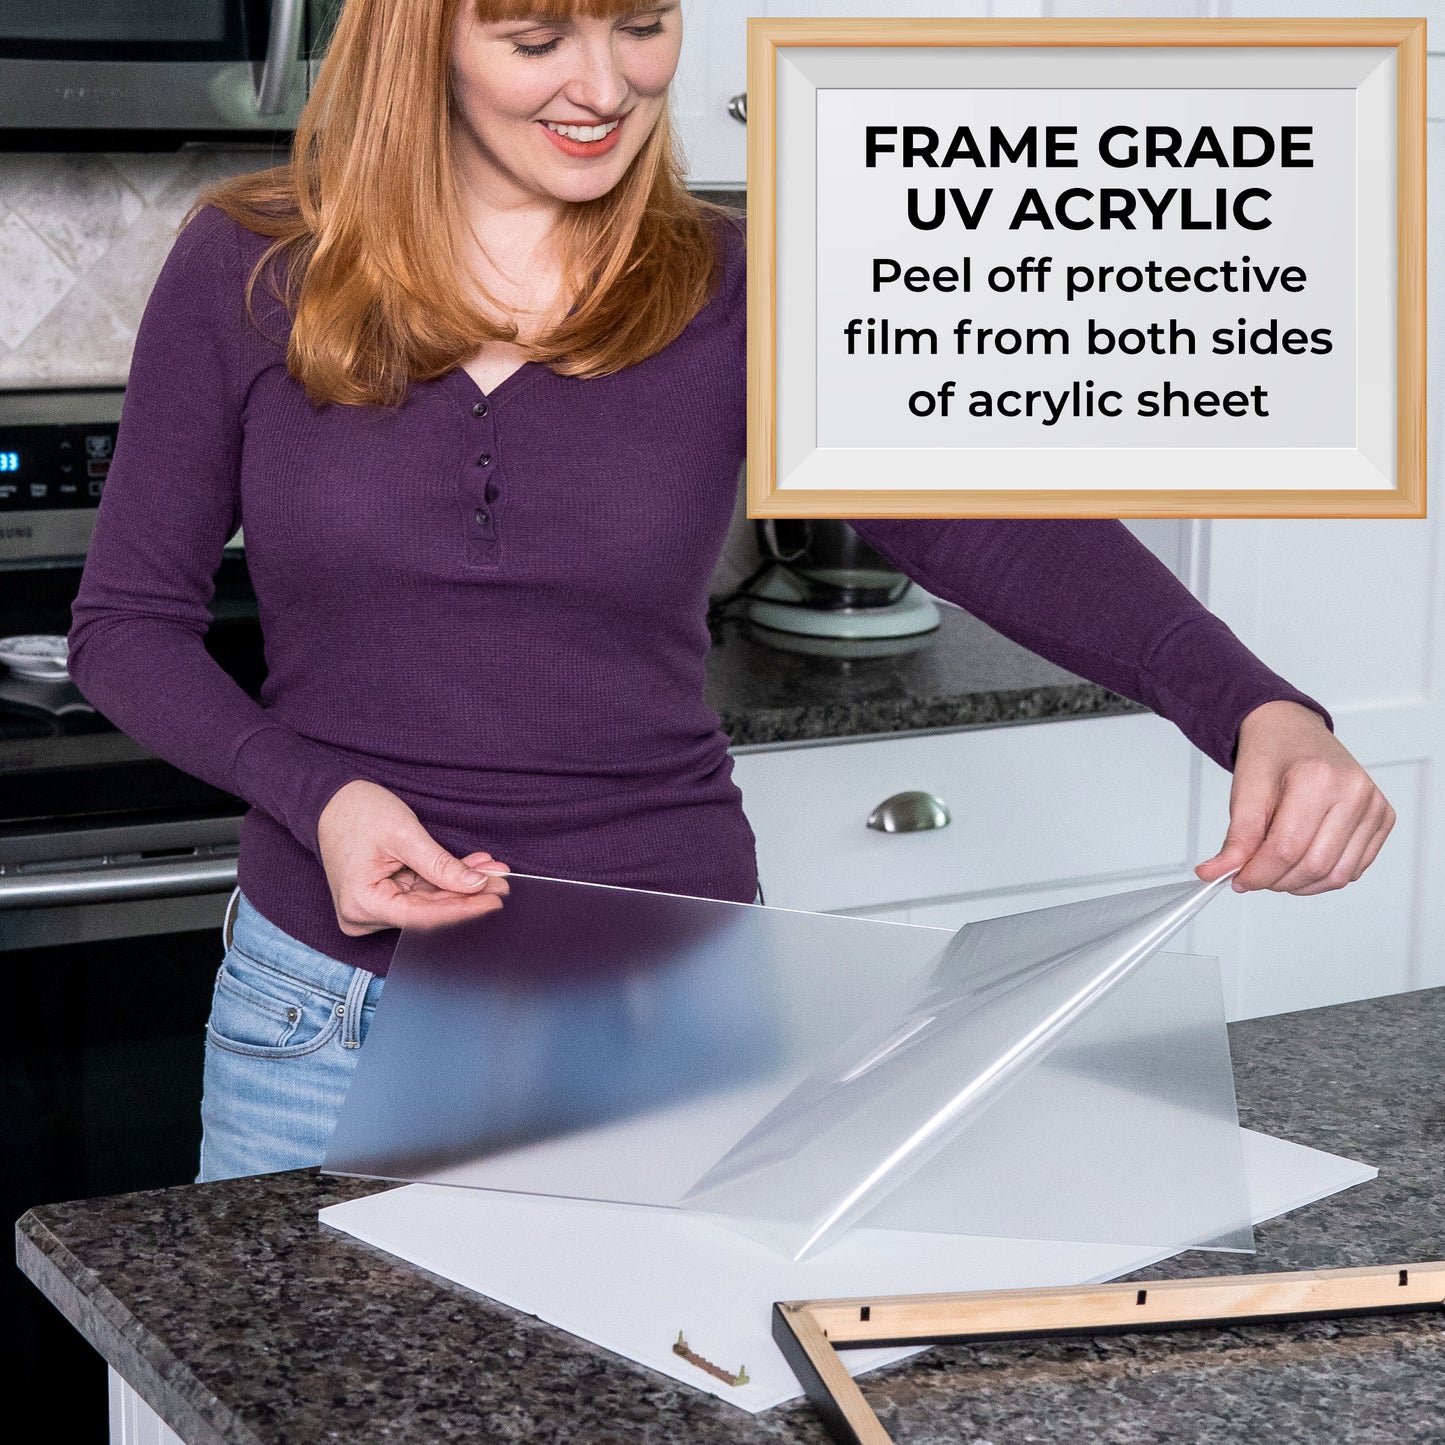 5x11 Frame Black Wood Picture Frame - UV Acrylic Plexiglass, Foam Board Backing aaa Hanging Hardware Included